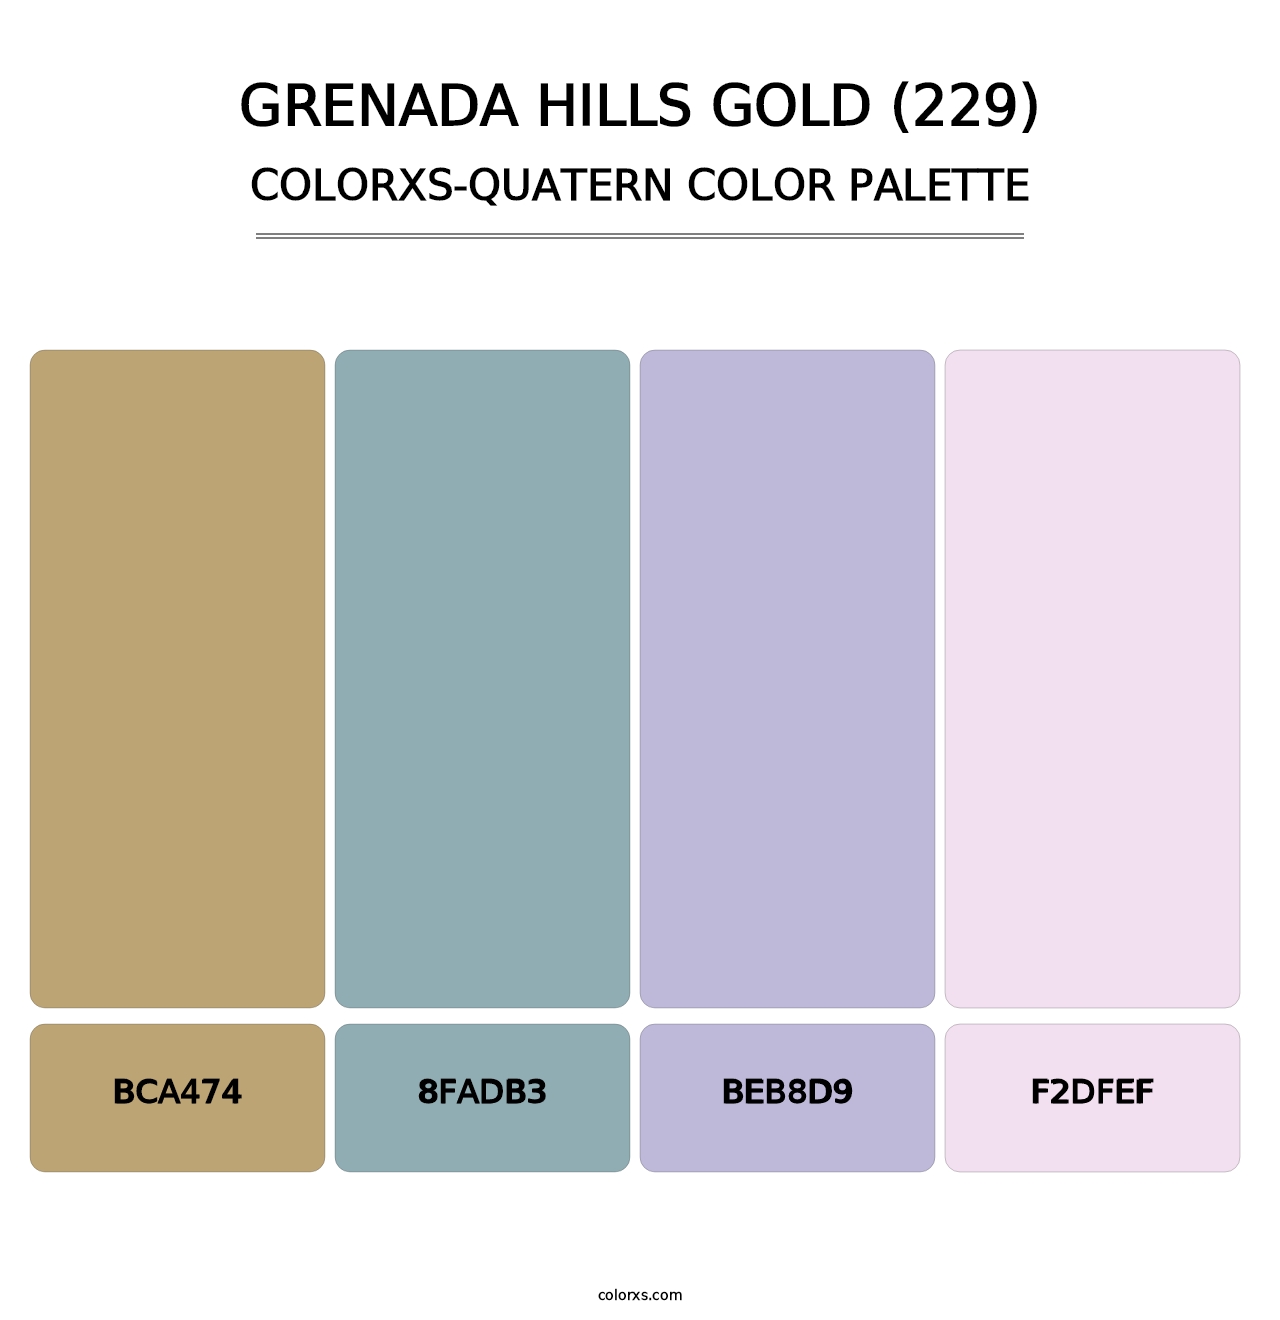 Grenada Hills Gold (229) - Colorxs Quatern Palette